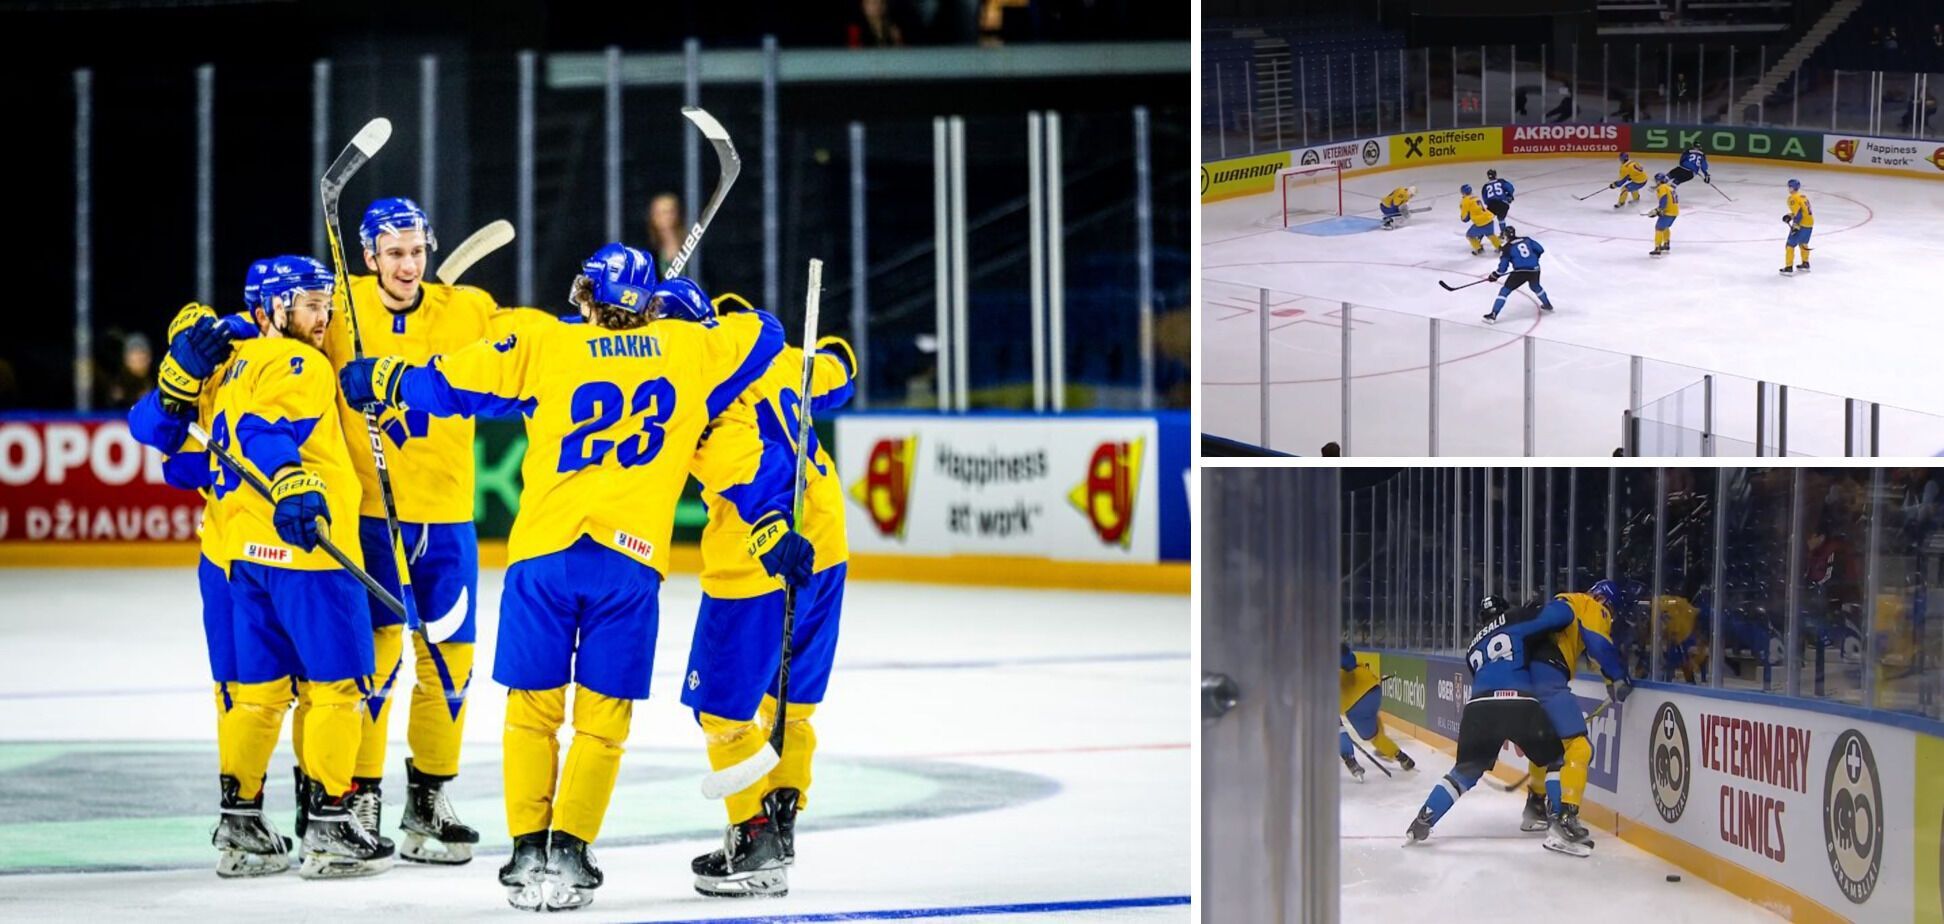 Ukraine has won its second victory at the World Ice Hockey Championship. Video